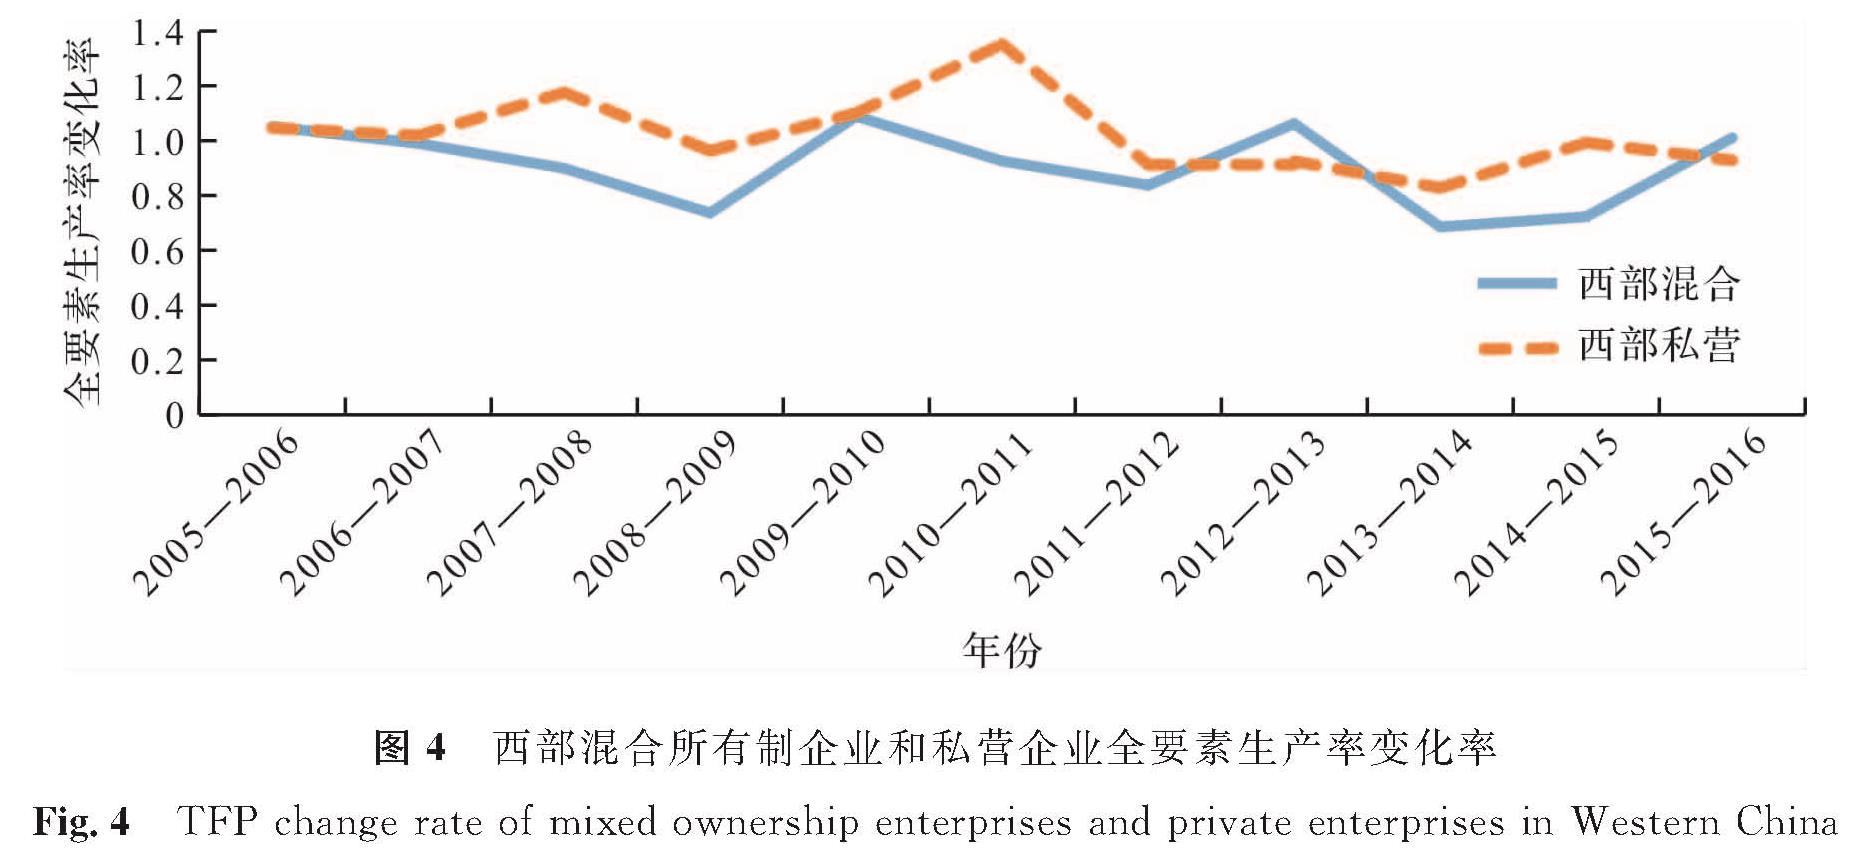 图4 西部混合所有制企业和私营企业全要素生产率变化率<br/>Fig.4 TFP change rate of mixed ownership enterprises and private enterprises in Western China